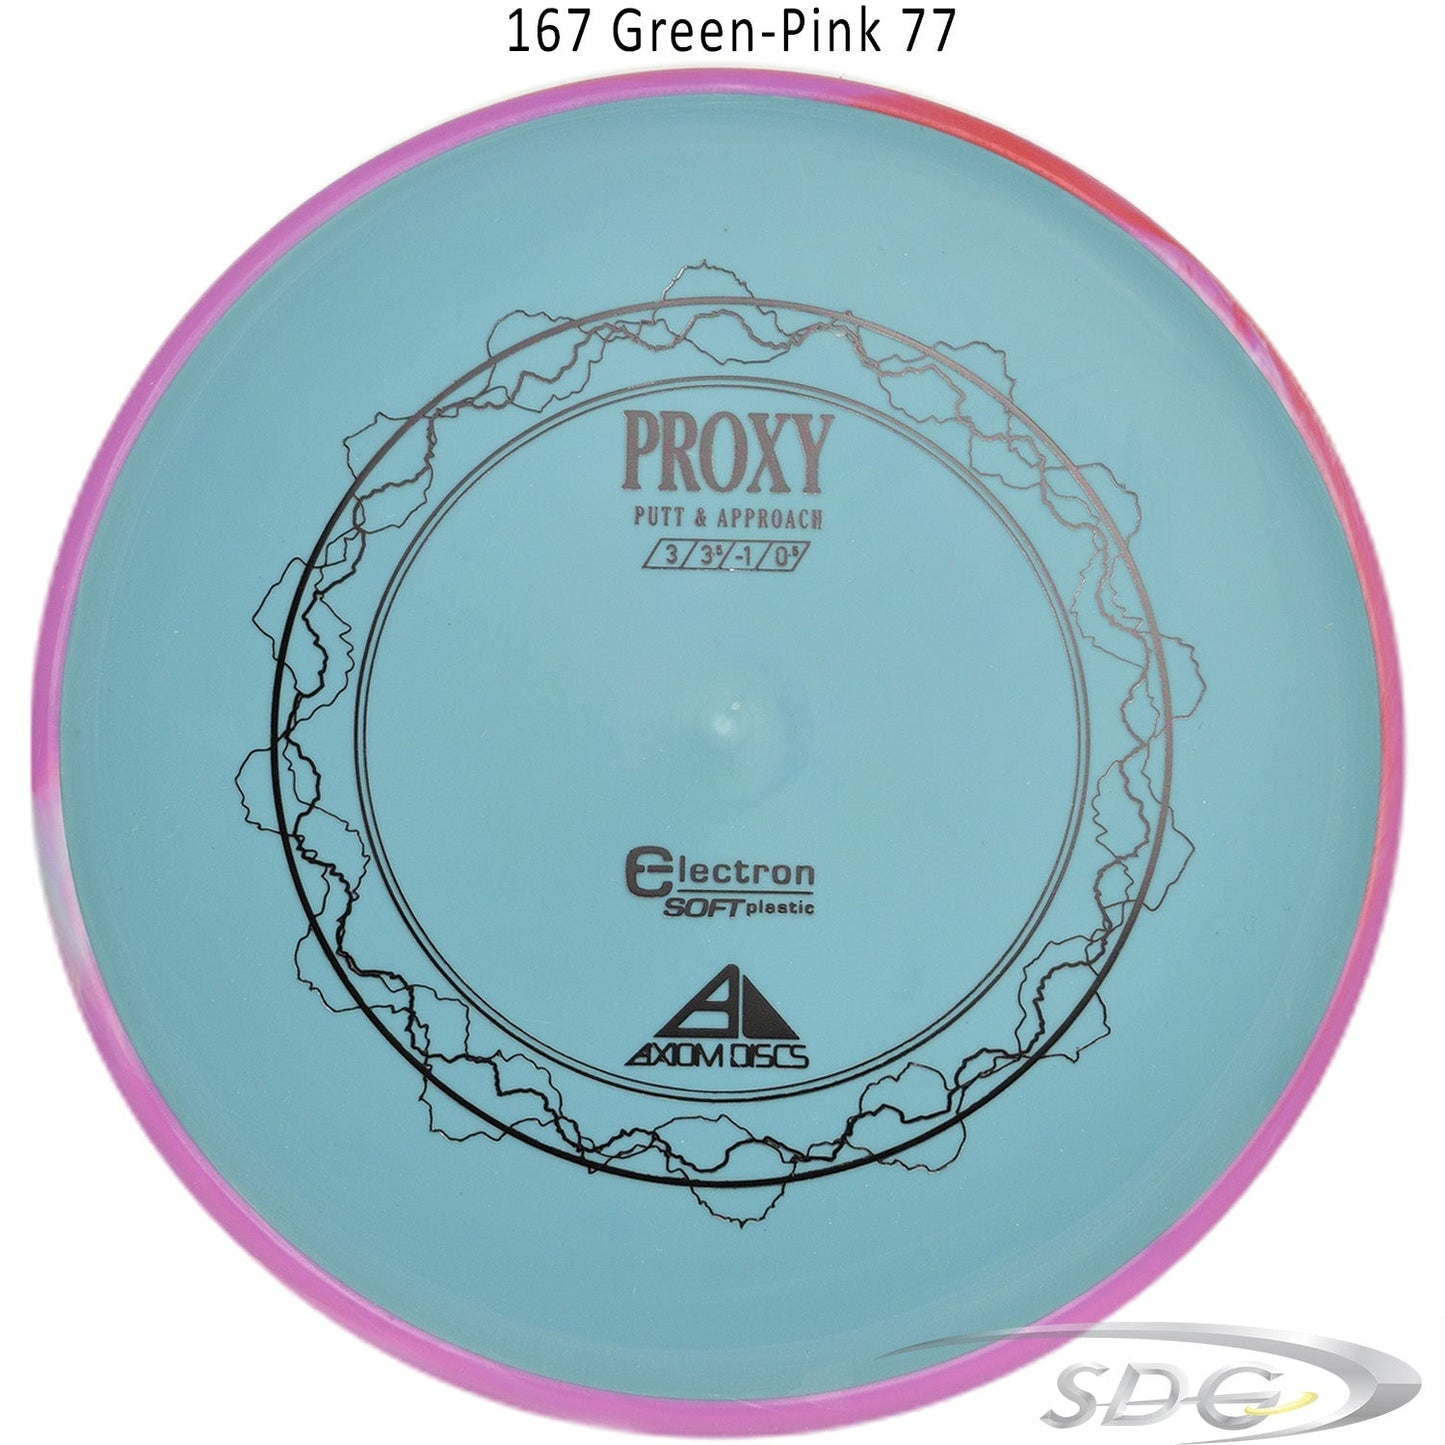 axiom-electron-proxy-soft-disc-golf-putt-approach 167 Green-Pink 77 